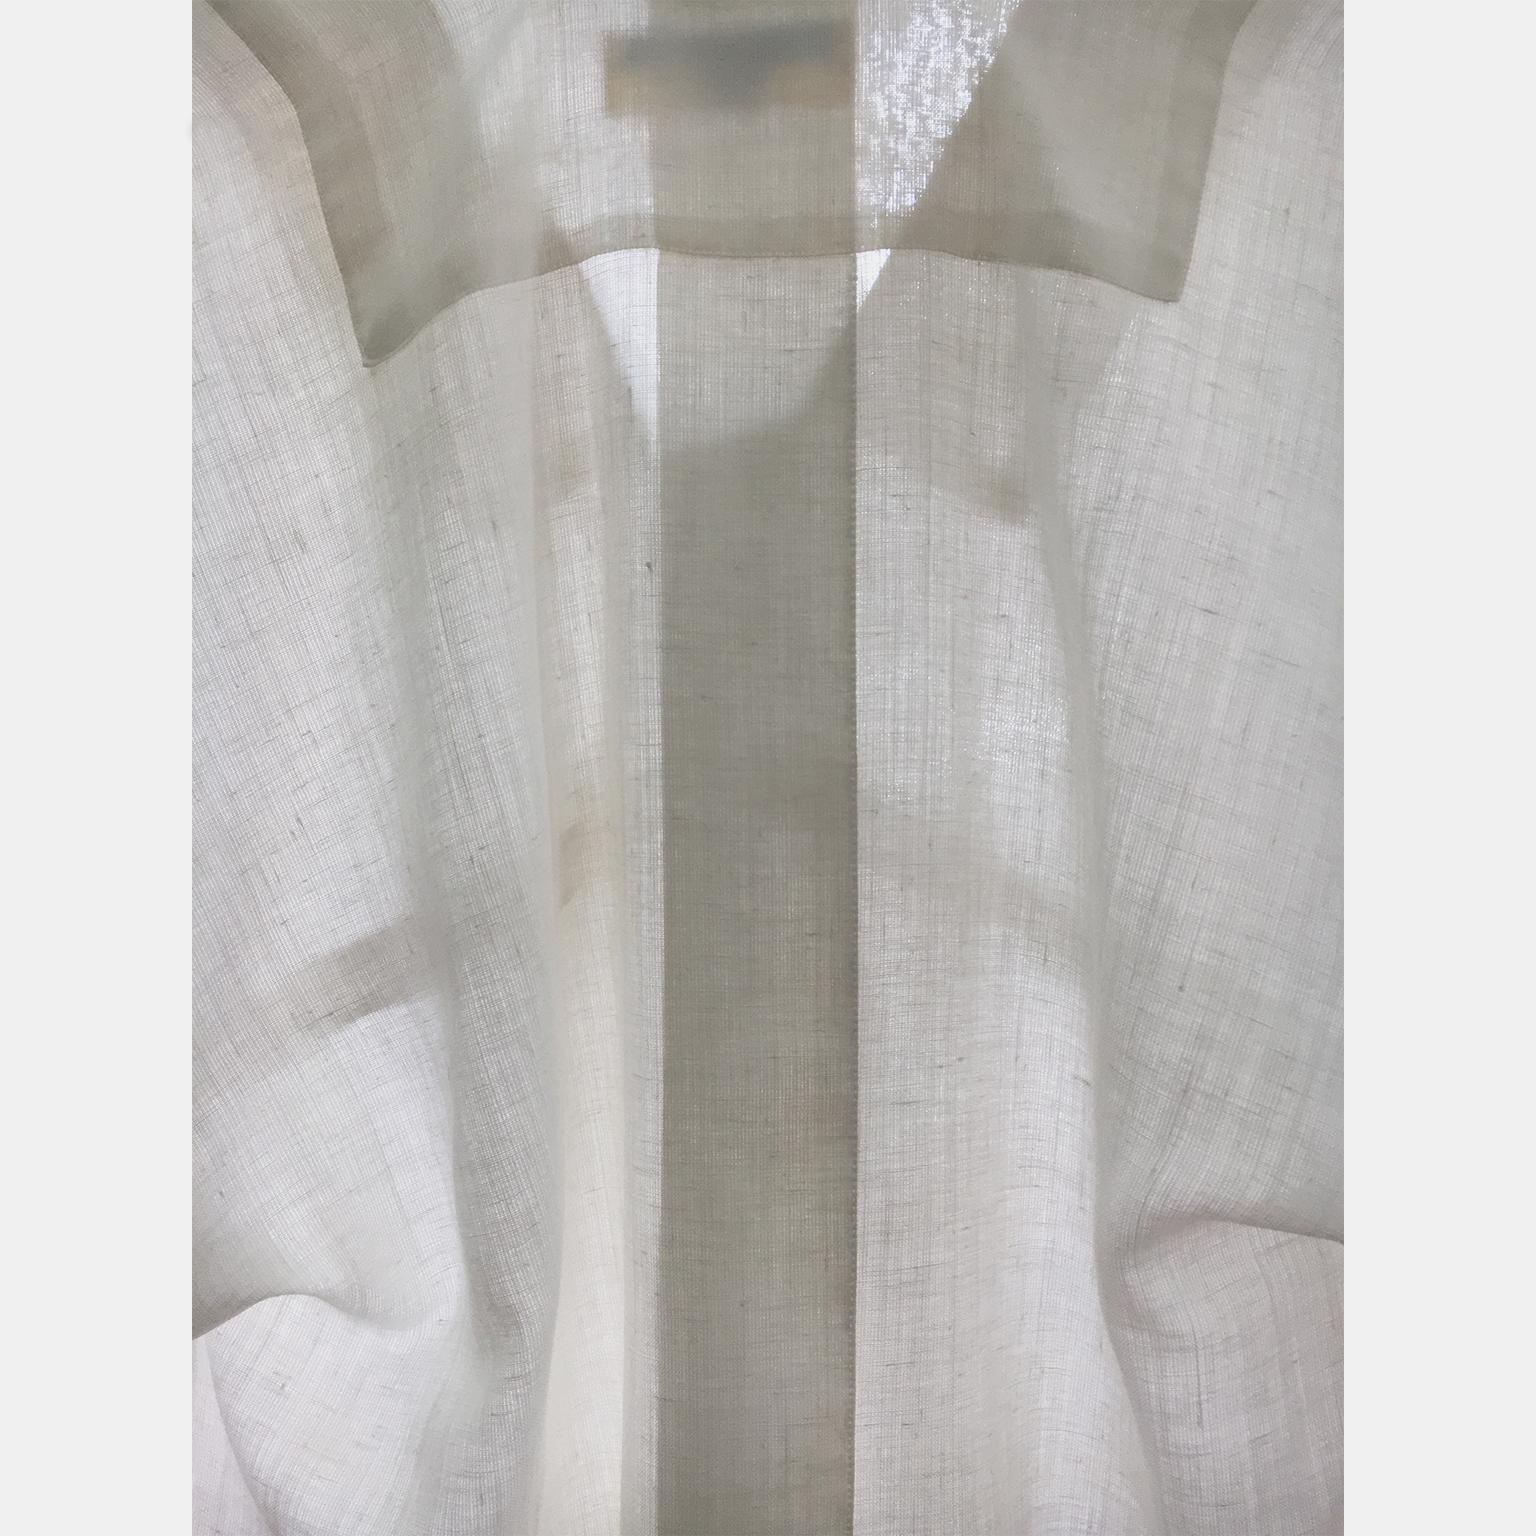 Early Issey Miyake White Linen Kaftan Long Shirt Paris 70s For Sale 1